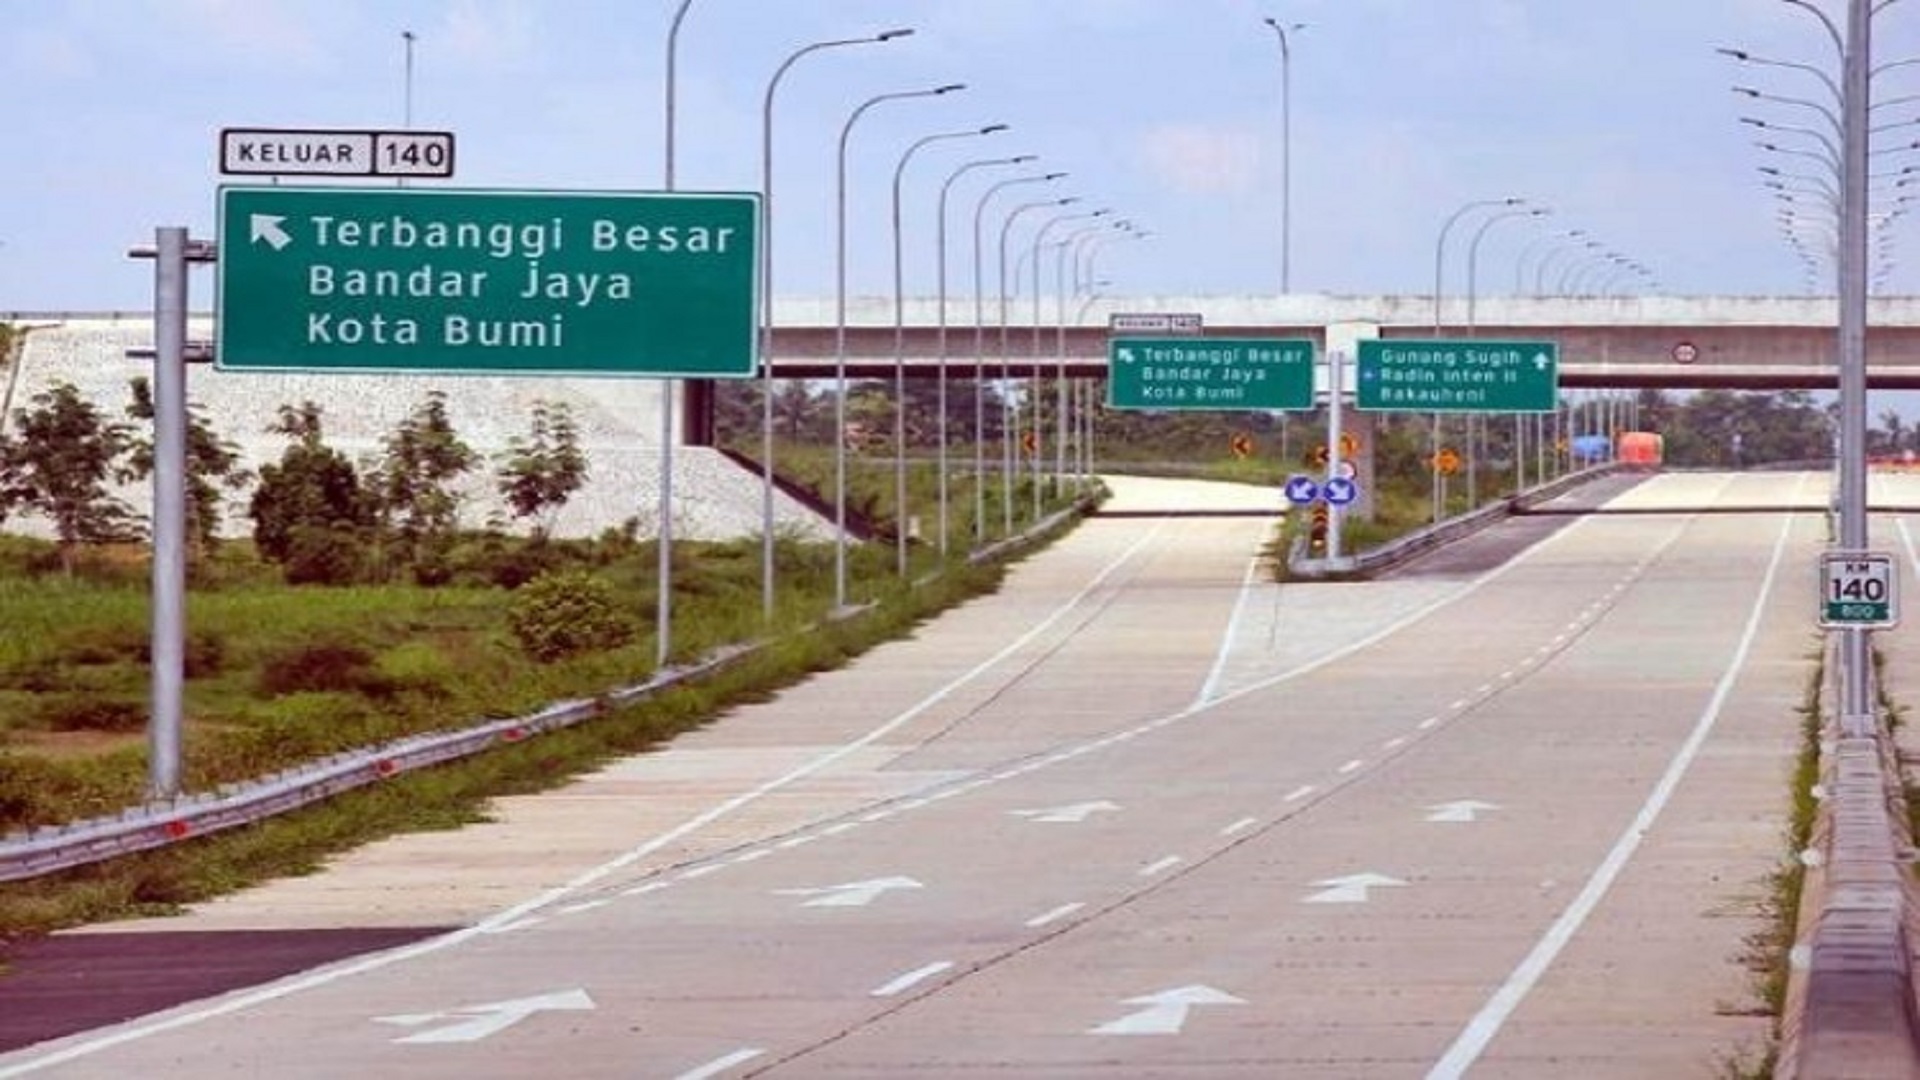   Jalan Tol Terbanggi Besar - Pematang Panggang - Kayu Agung (Terpeka), Tol Terpanjang di Indonesia